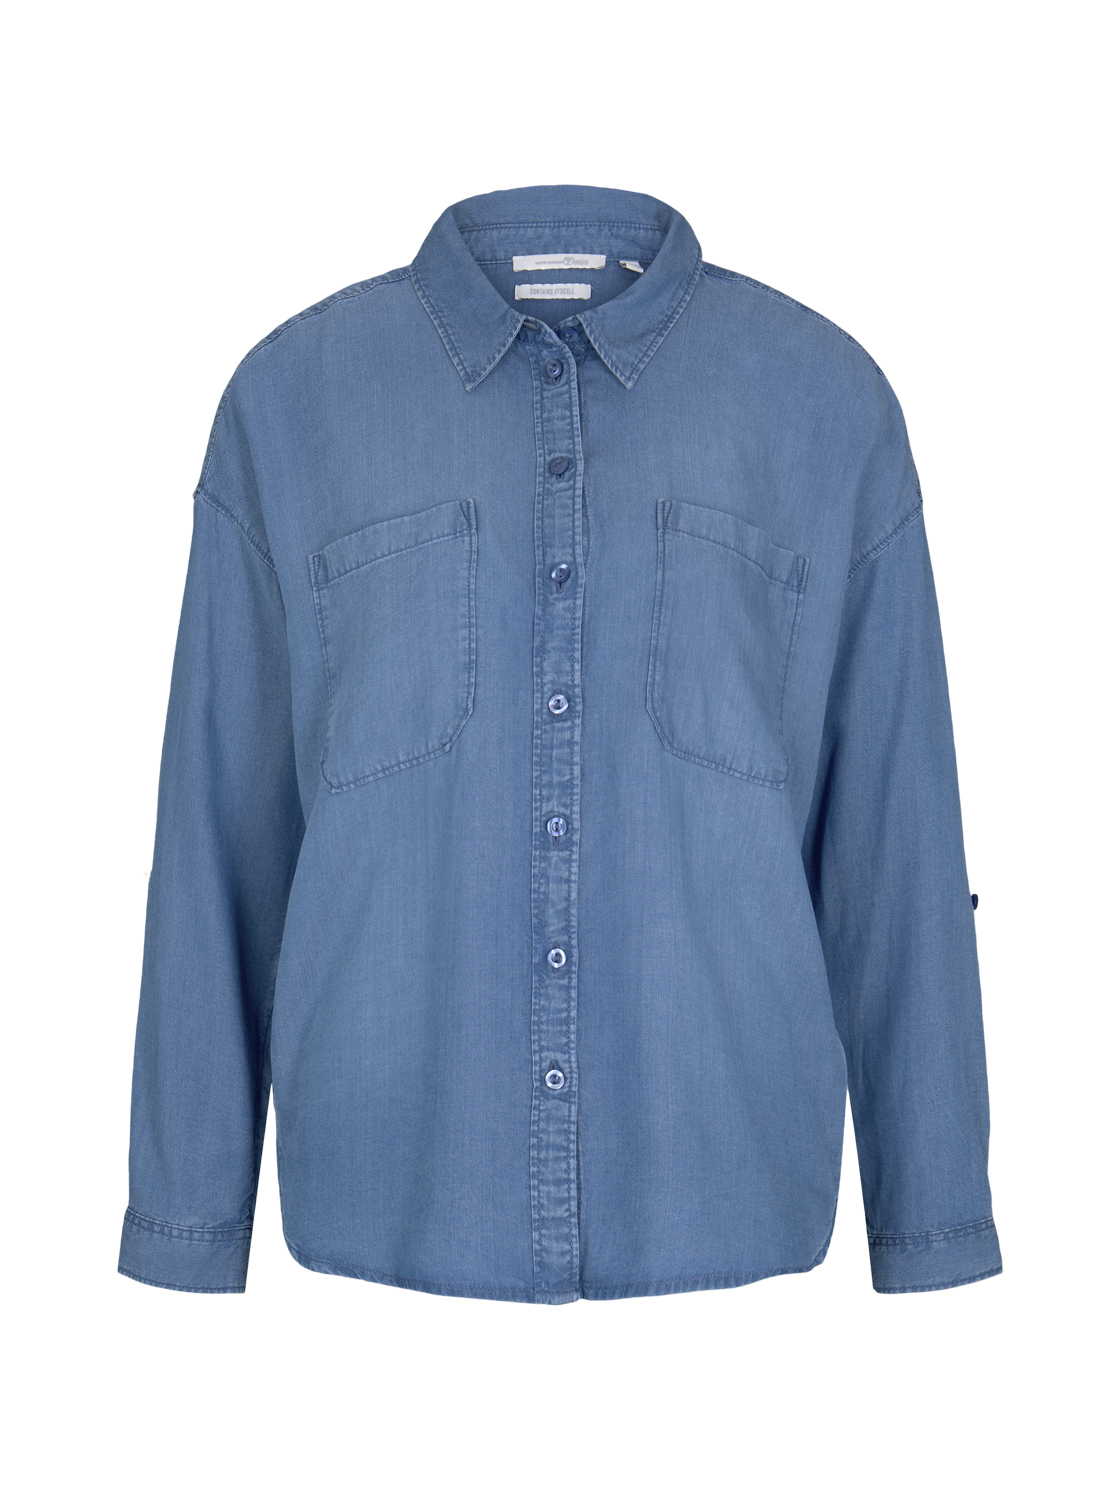 Блуза TOM TAILOR Denim Hemd BUTTON DOWN, синий футболка tom tailor размер xl белый синий